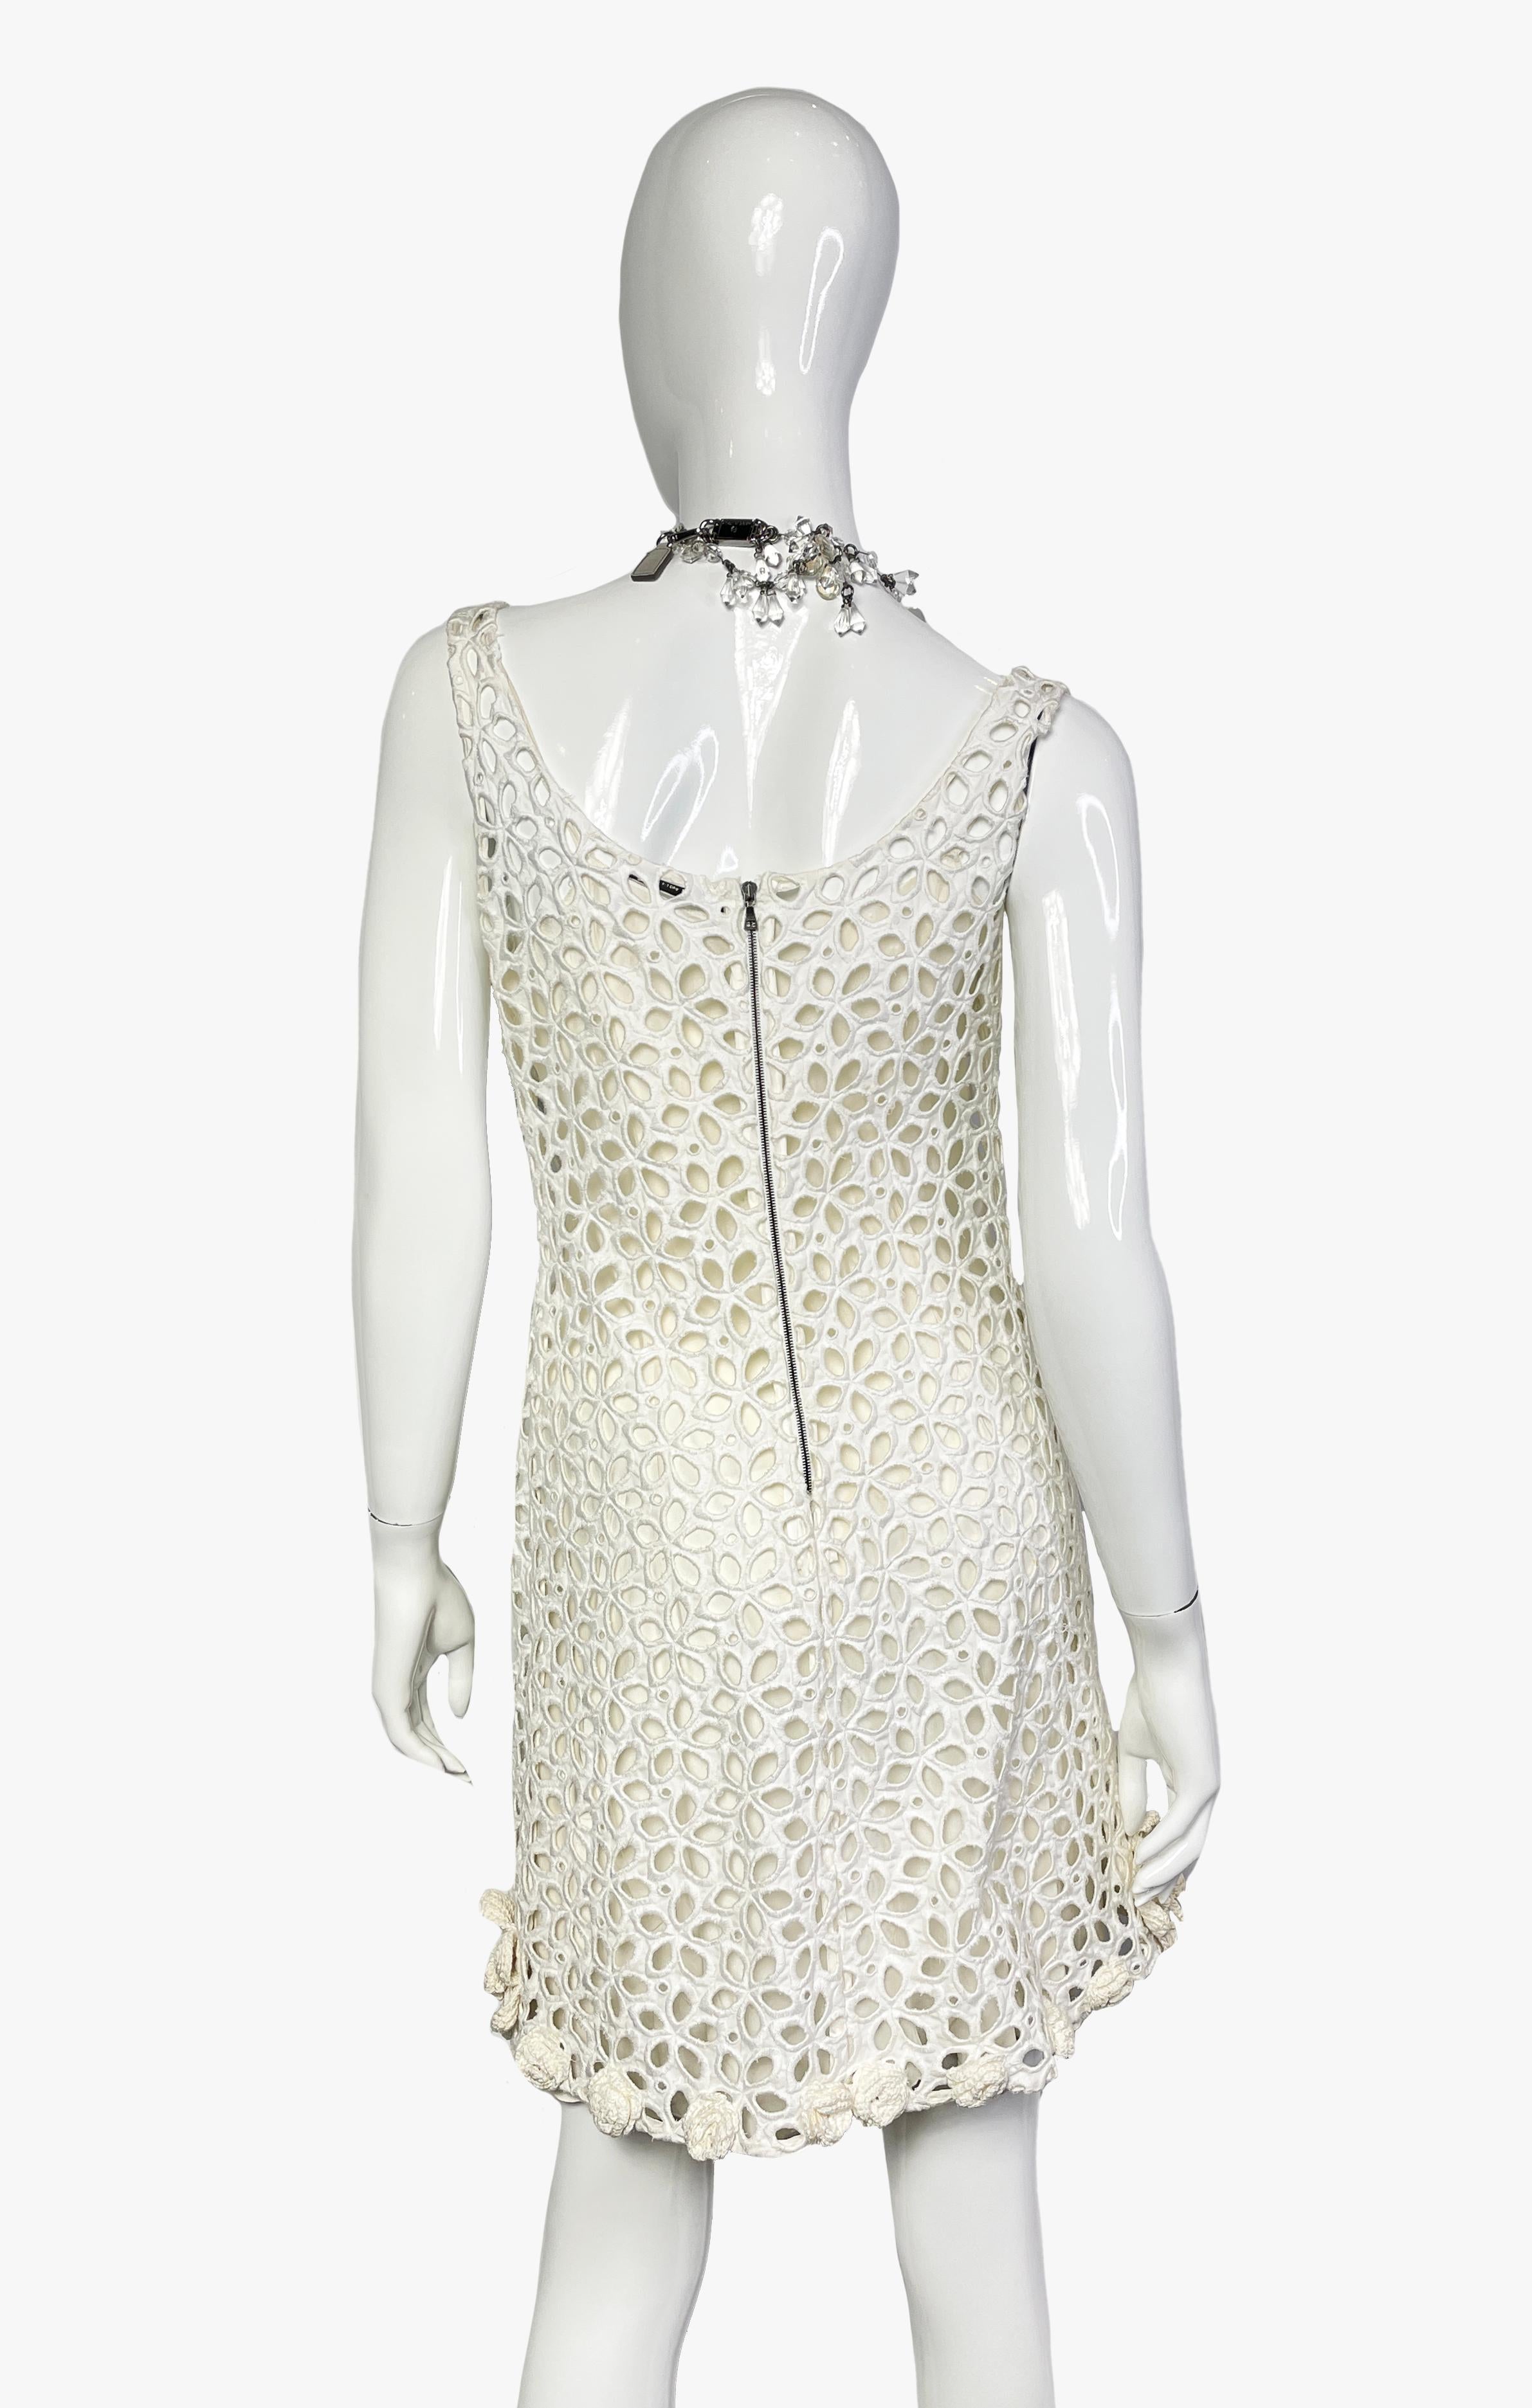 Mini robe en crochet Off-White avec collier en cristal, Prada, 2014  1